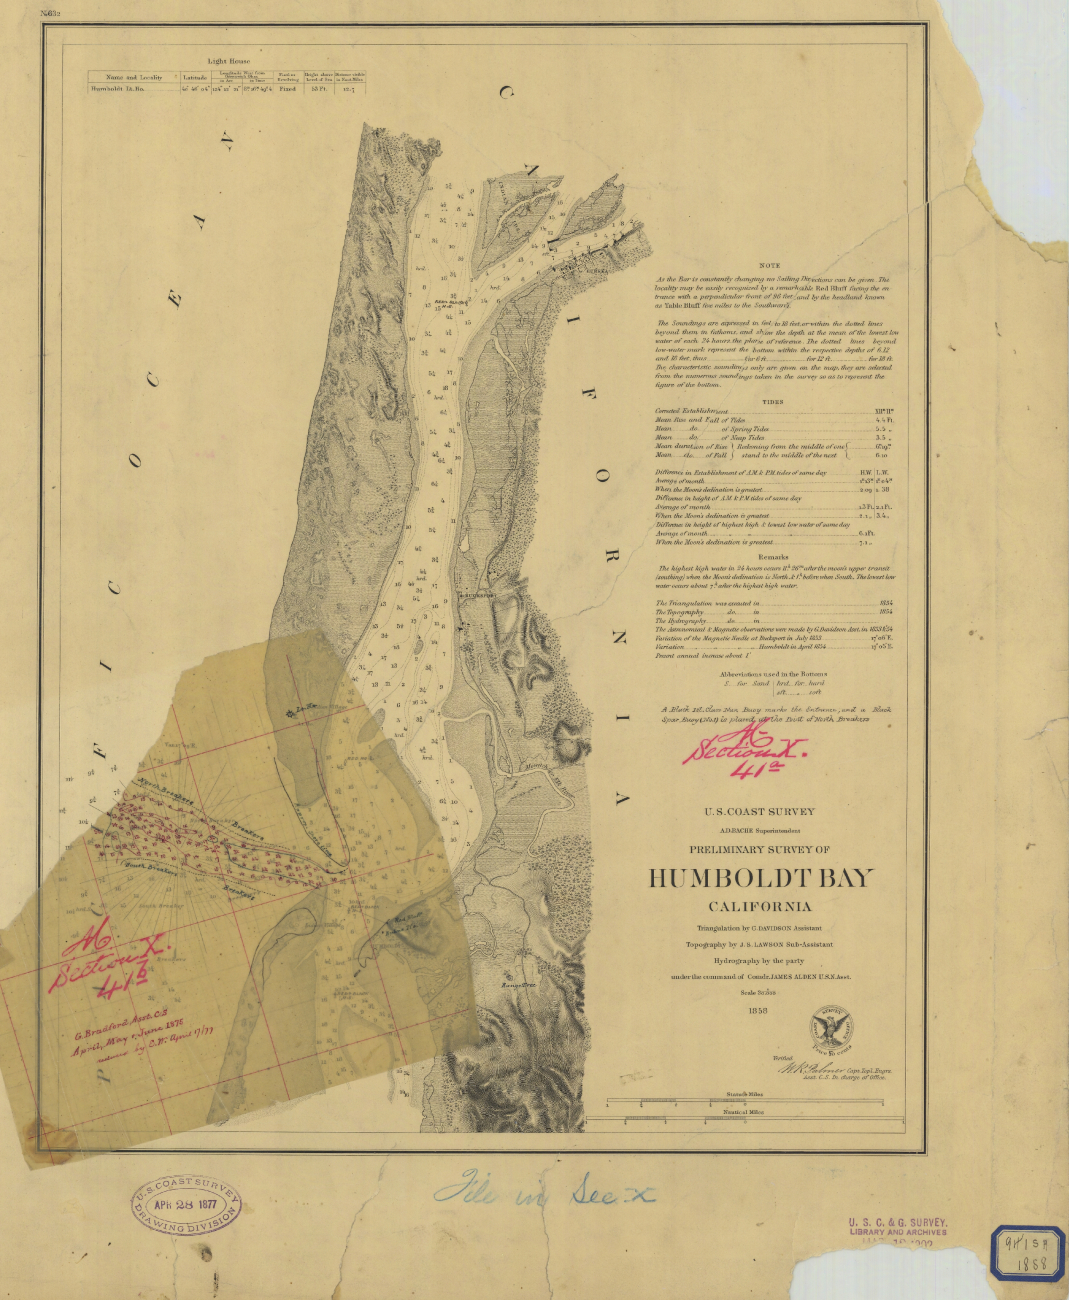 Preliminary Survey of Humboldt Bay, California